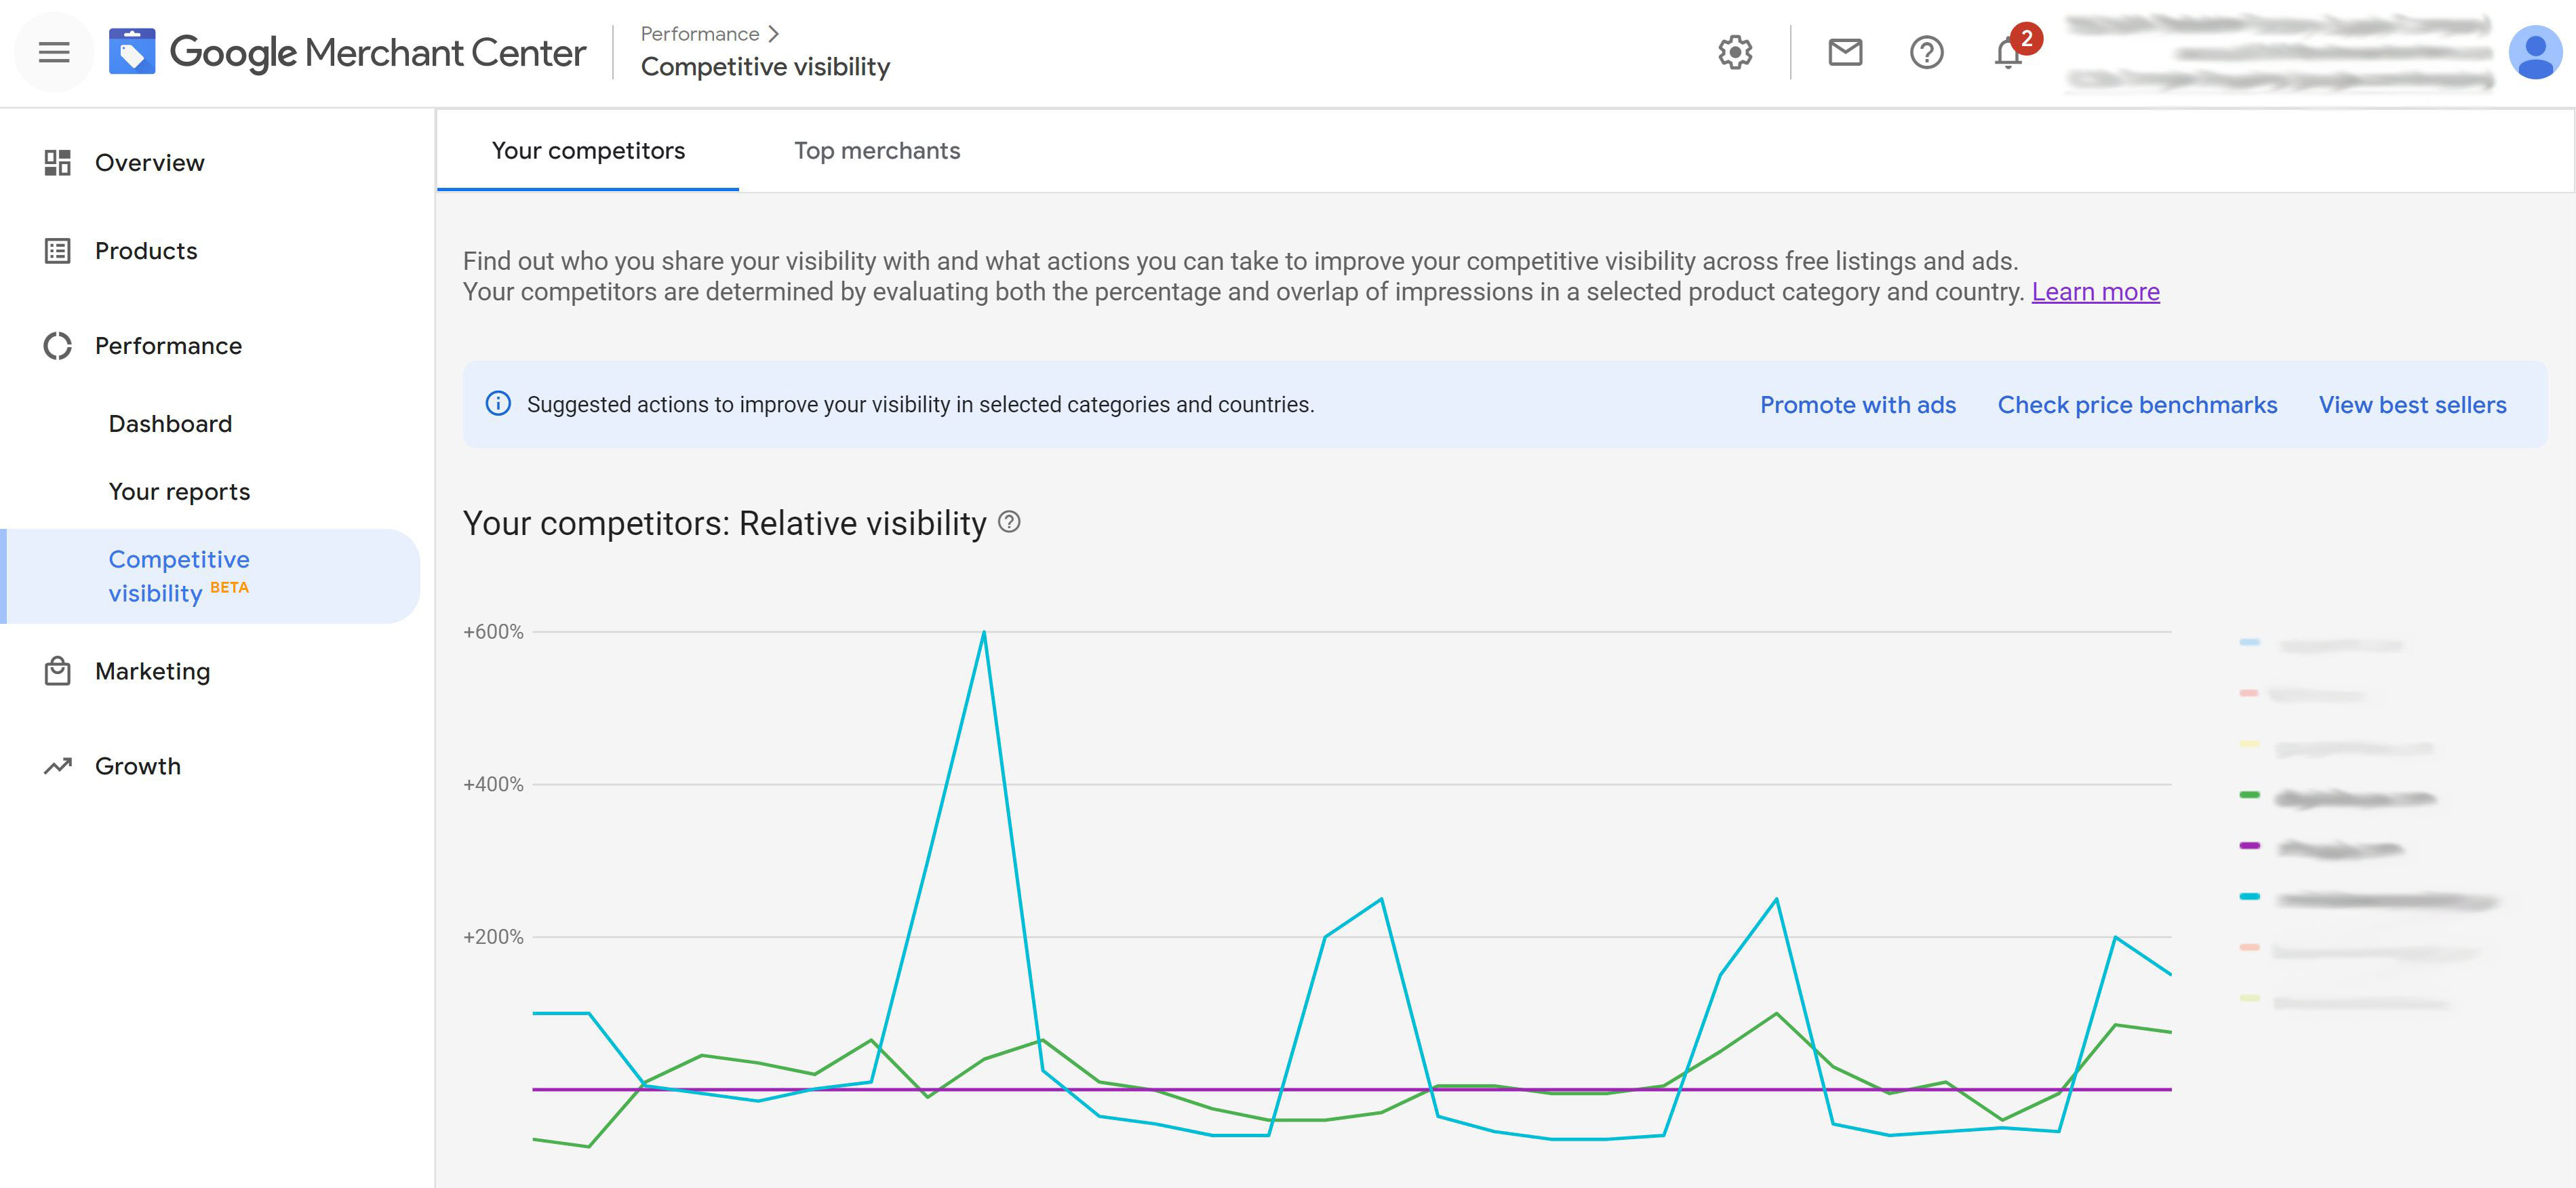 Google Merchant Centers new beta program, the Competitive Visibility Report